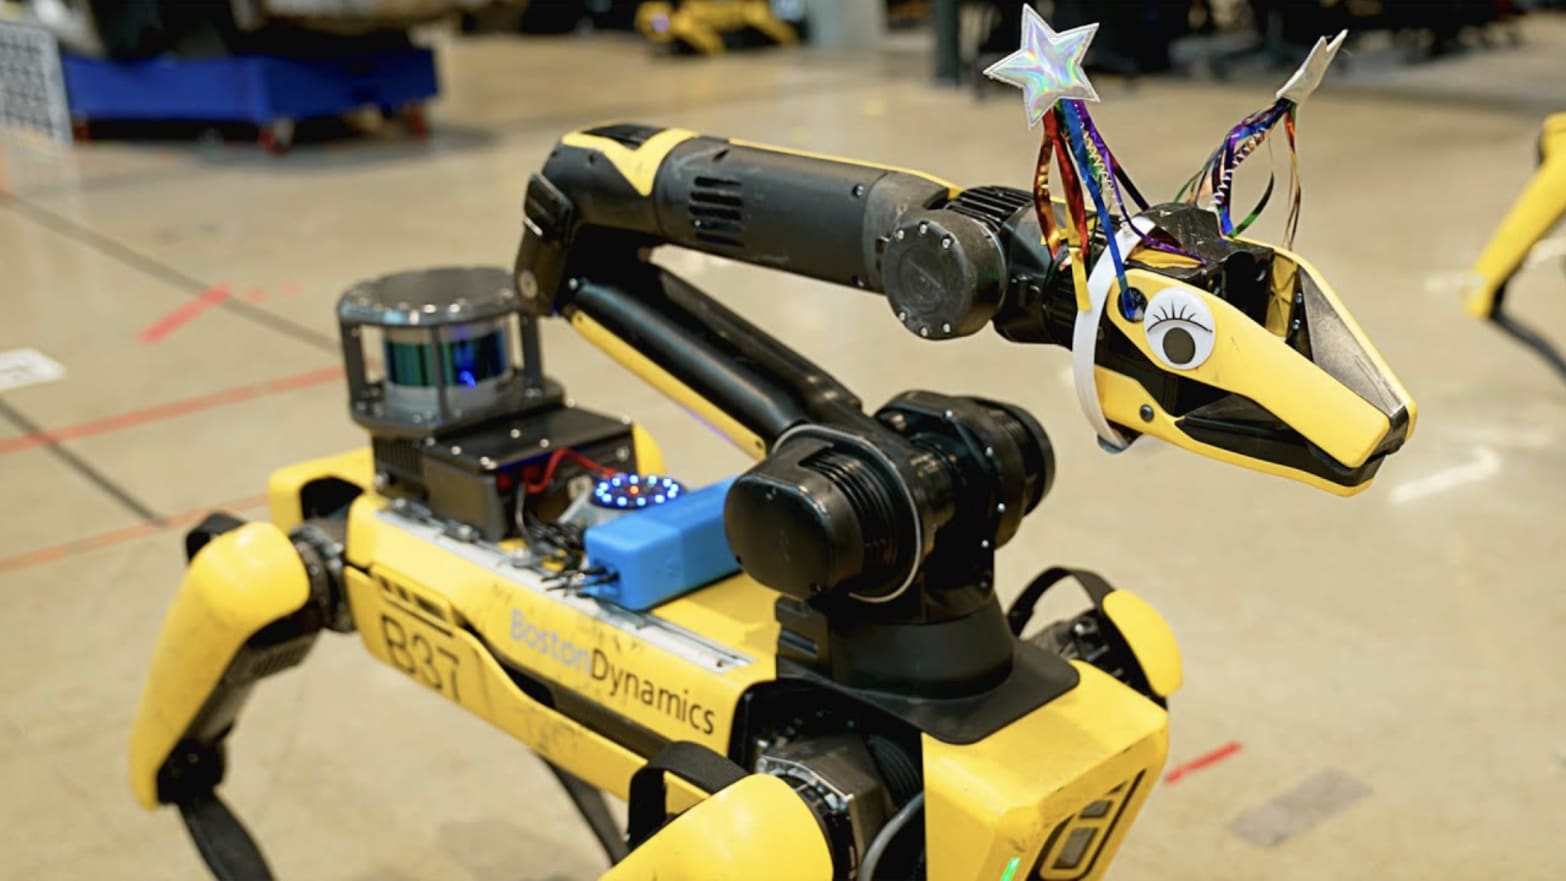 Boston Dynamics' Spot robot wearing googly eyes and a hat